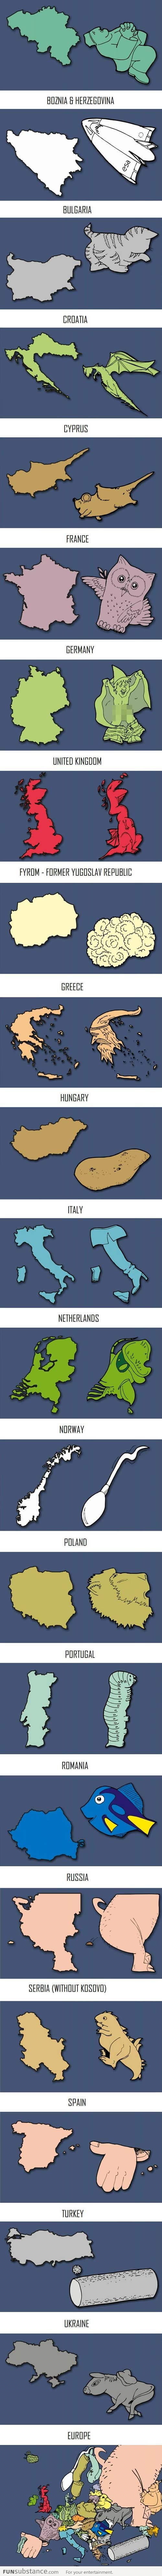 Europe according to creative people